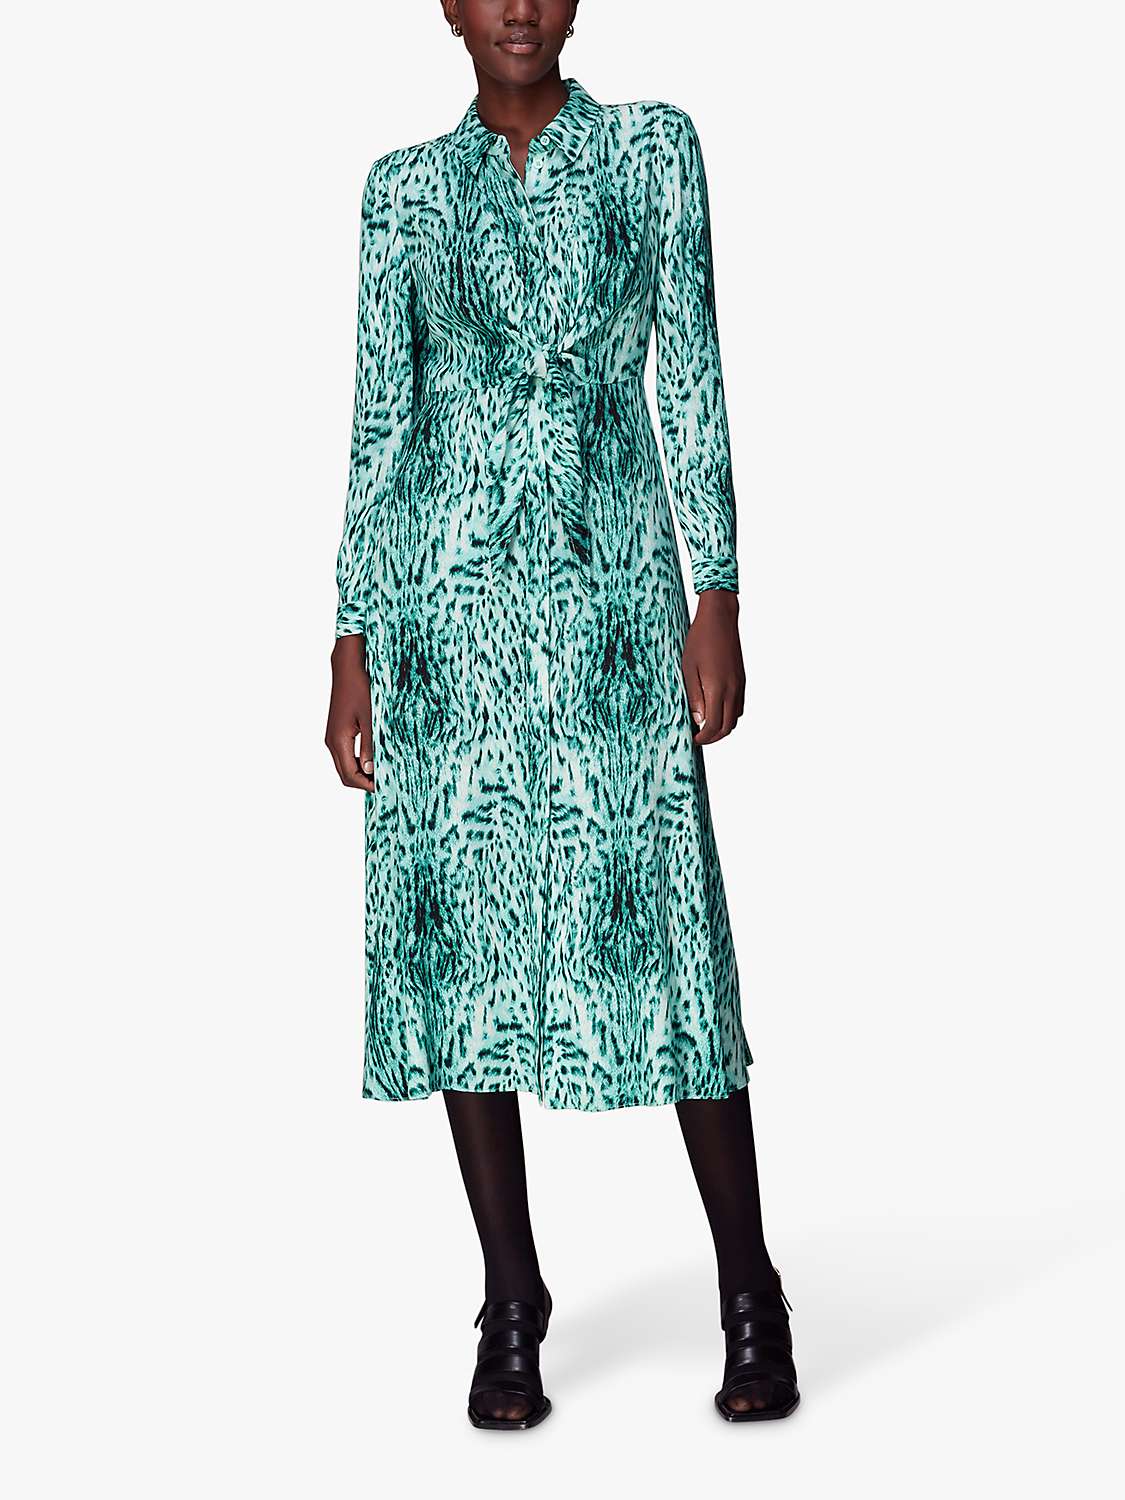 Buy Whistles Brushed Leopard Tie Midi Dress, Green/Multi Online at johnlewis.com